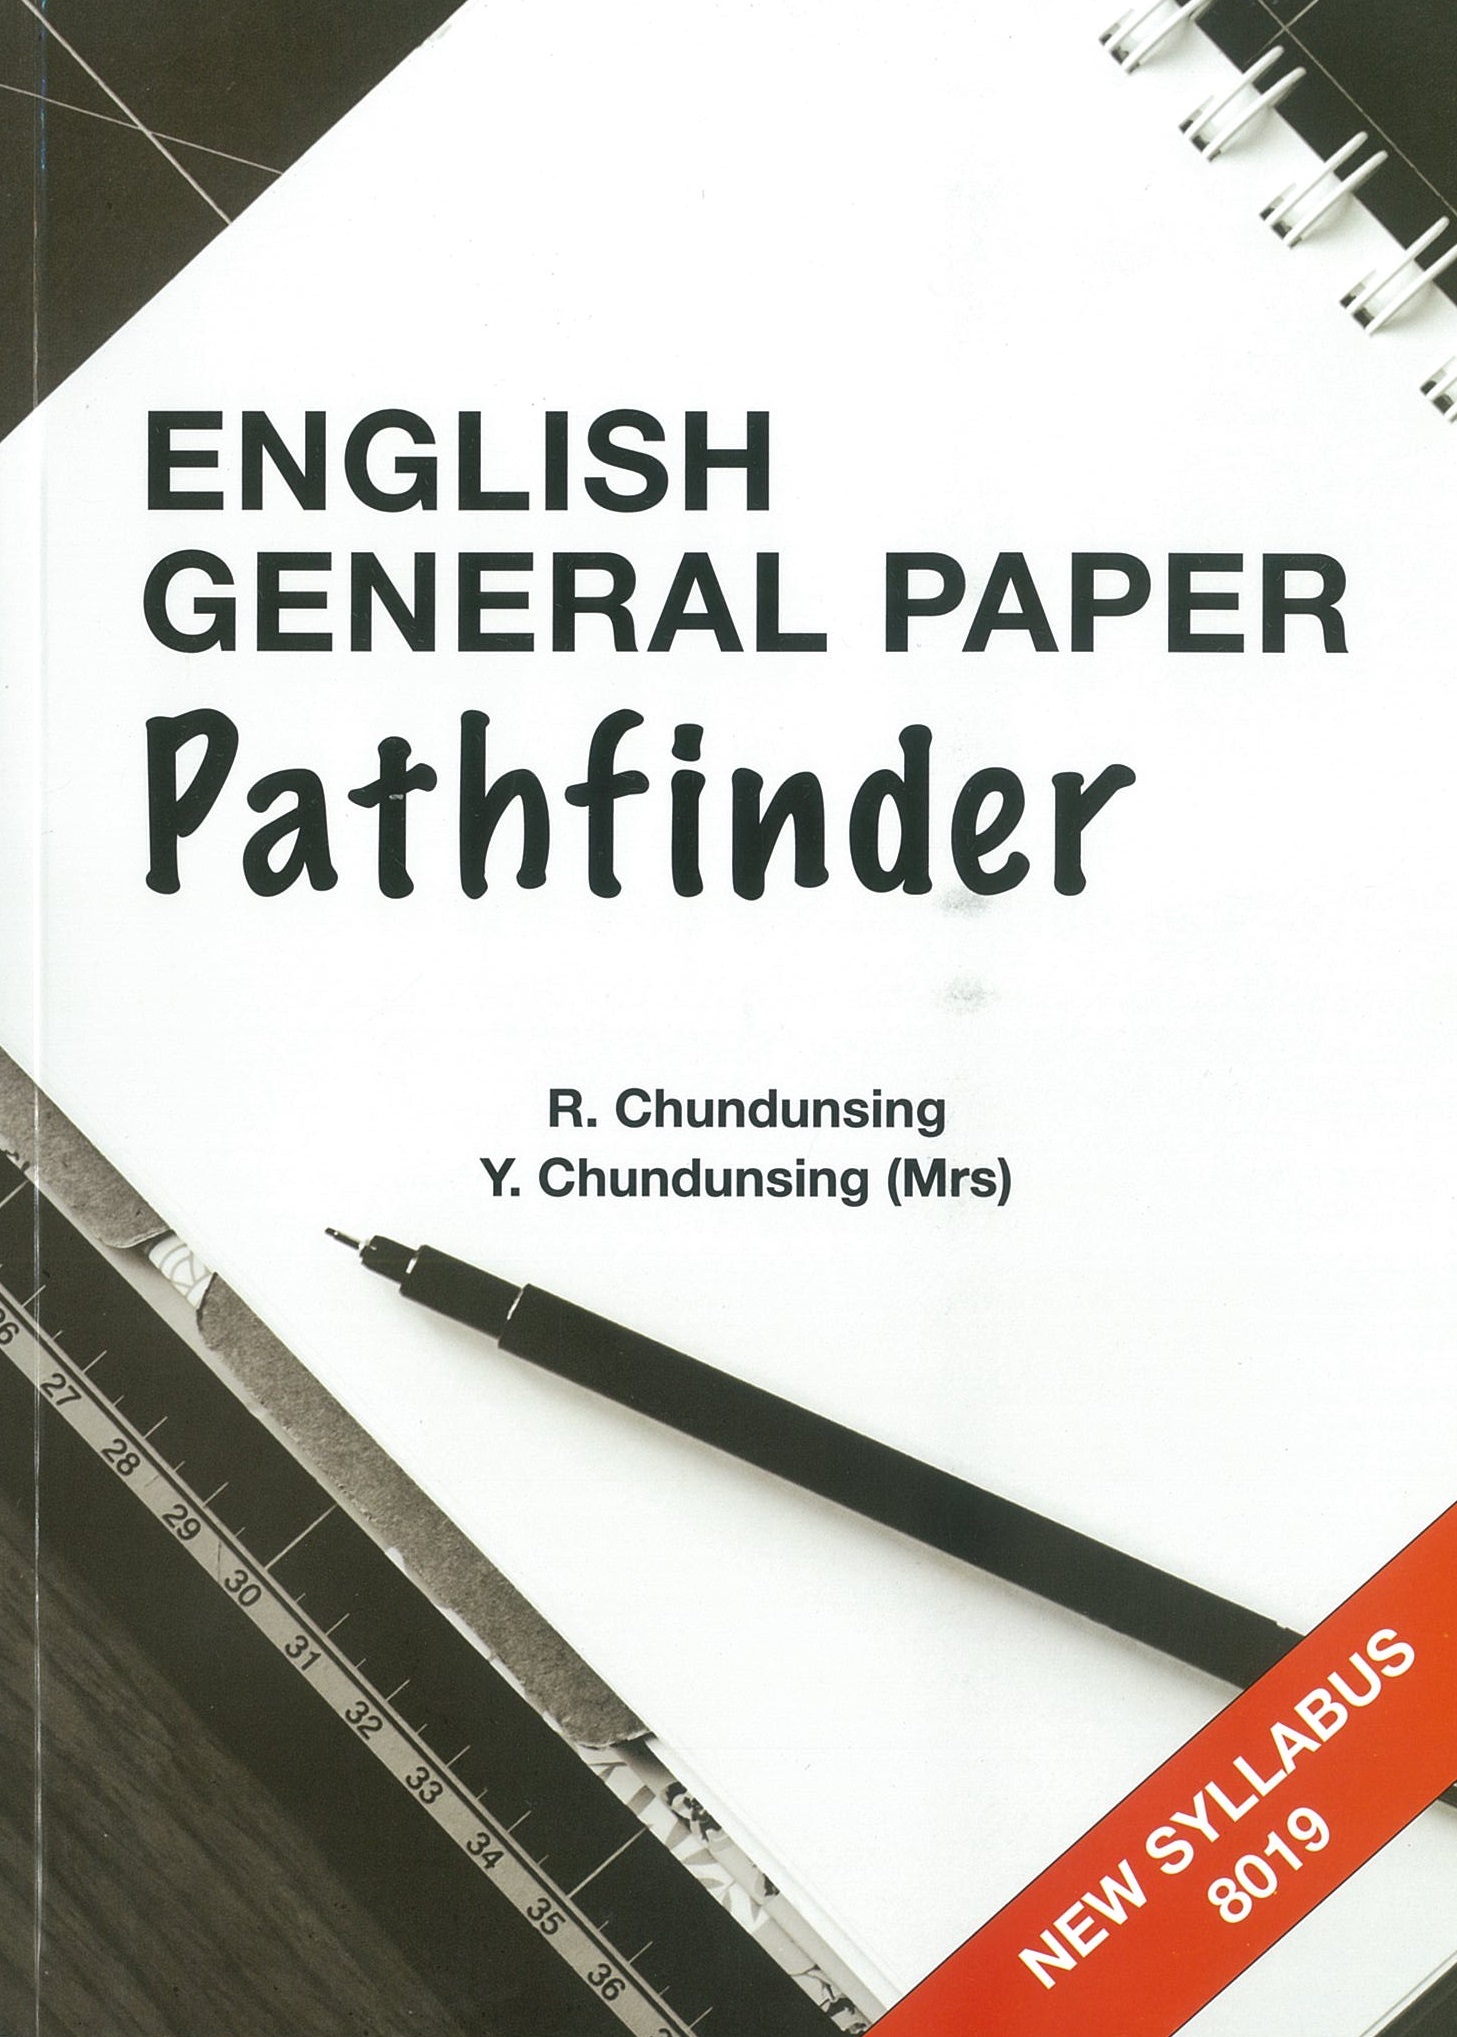 BM - ENGLISH GENERAL PAPER PATHFINDER - CHUNDUNSING